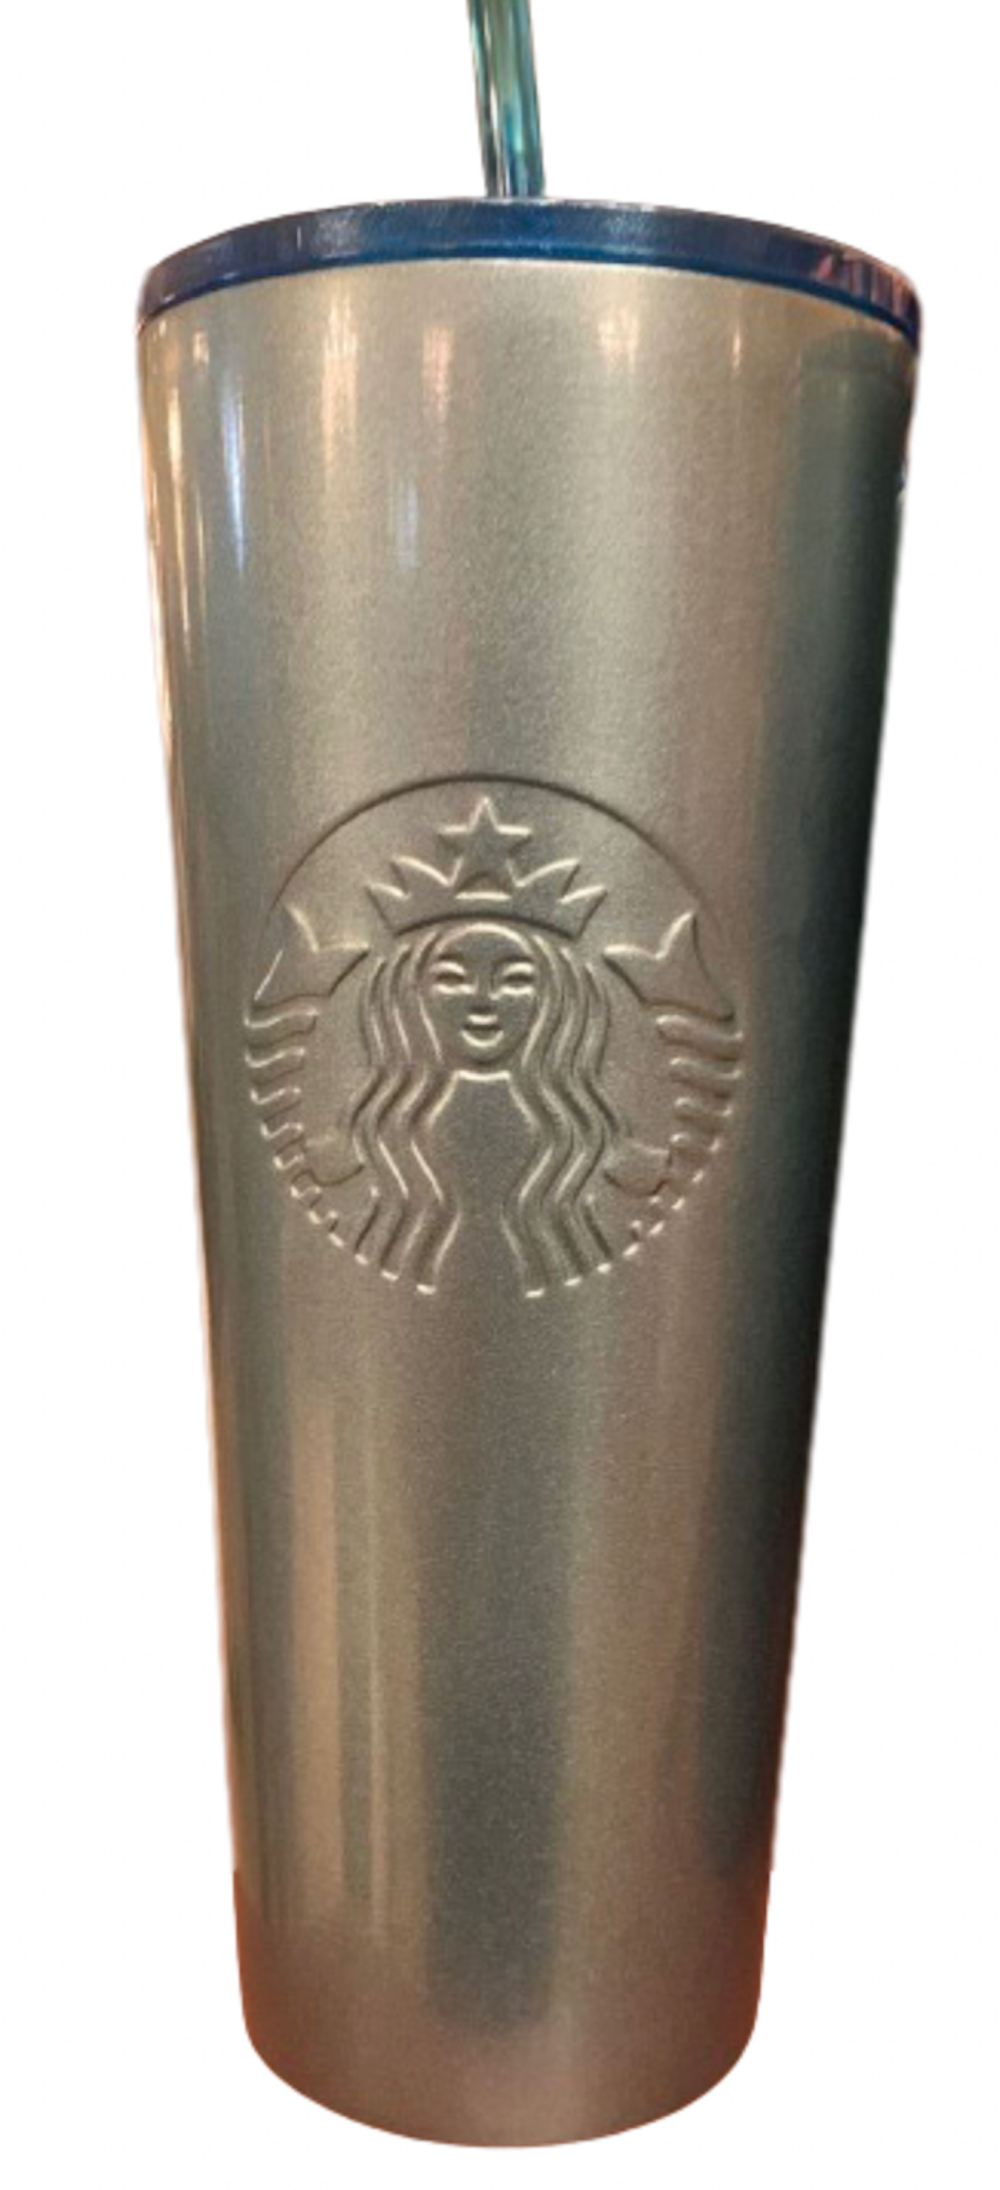 Disney Starbucks Magic Kingdom Icons Metal Tumbler Cup with Straw New